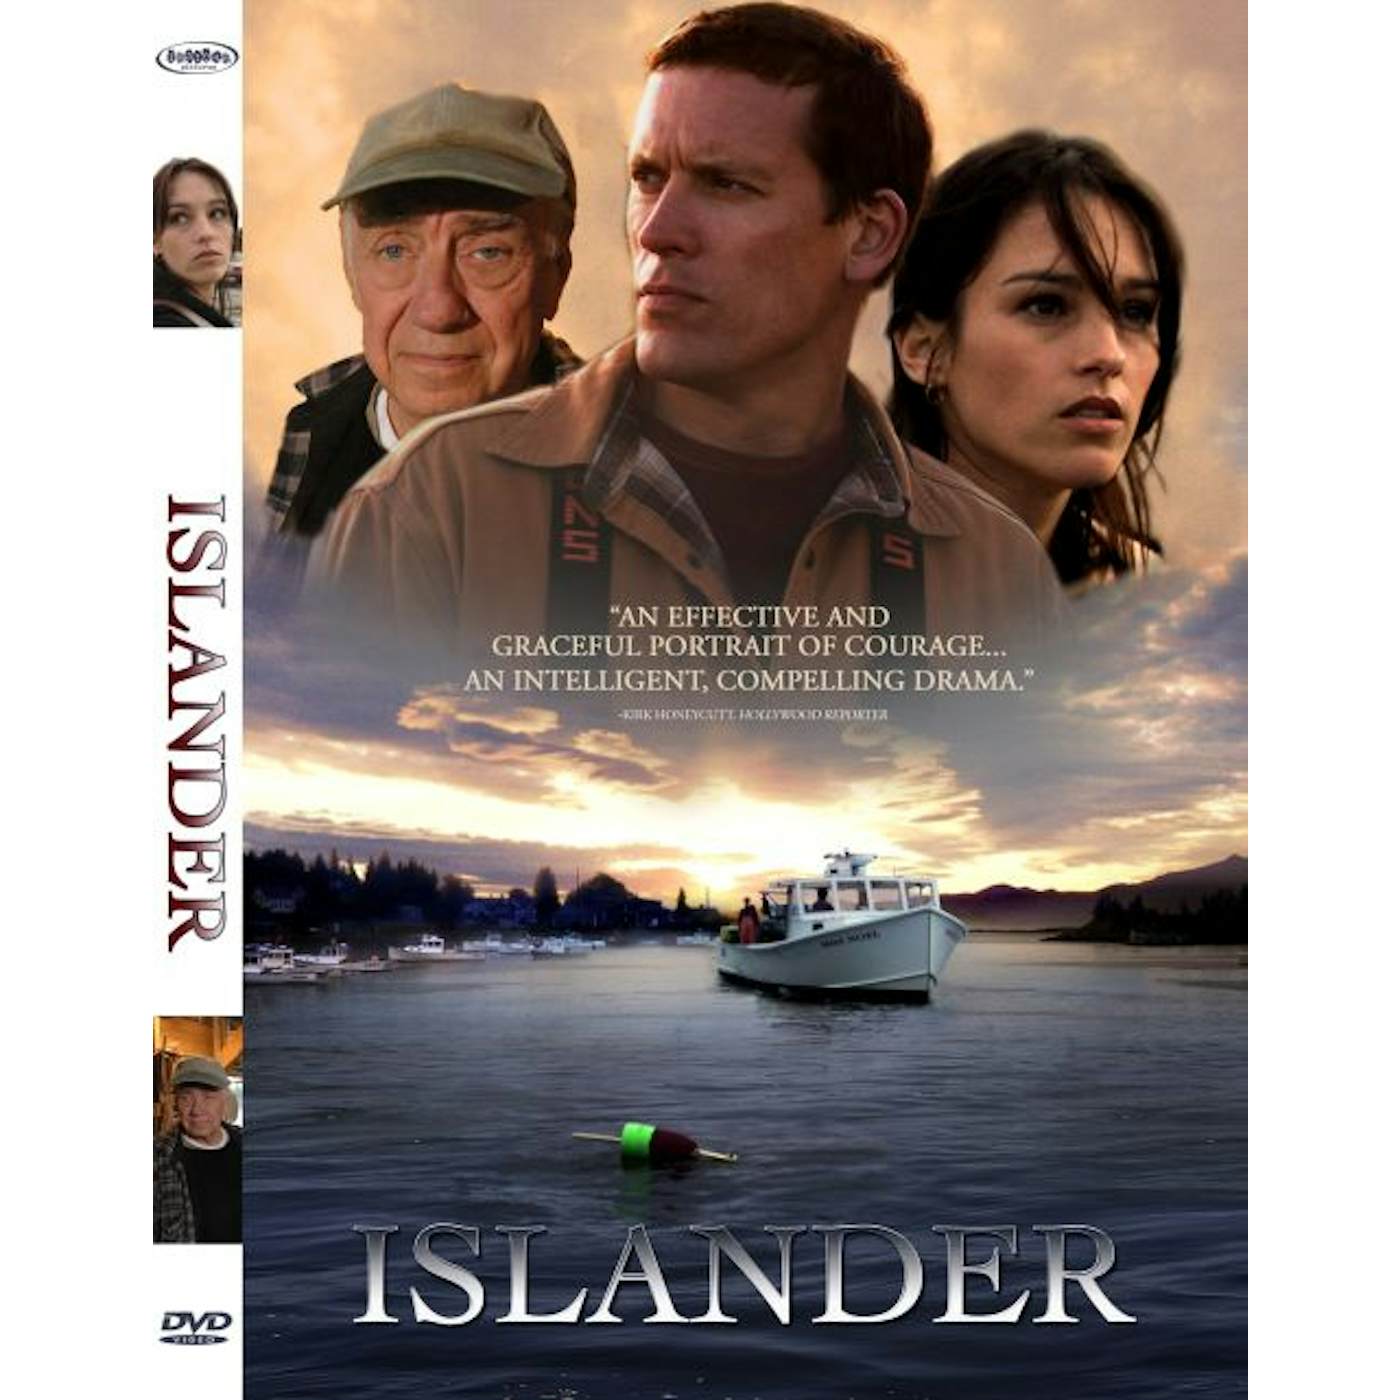 ISLANDER DVD